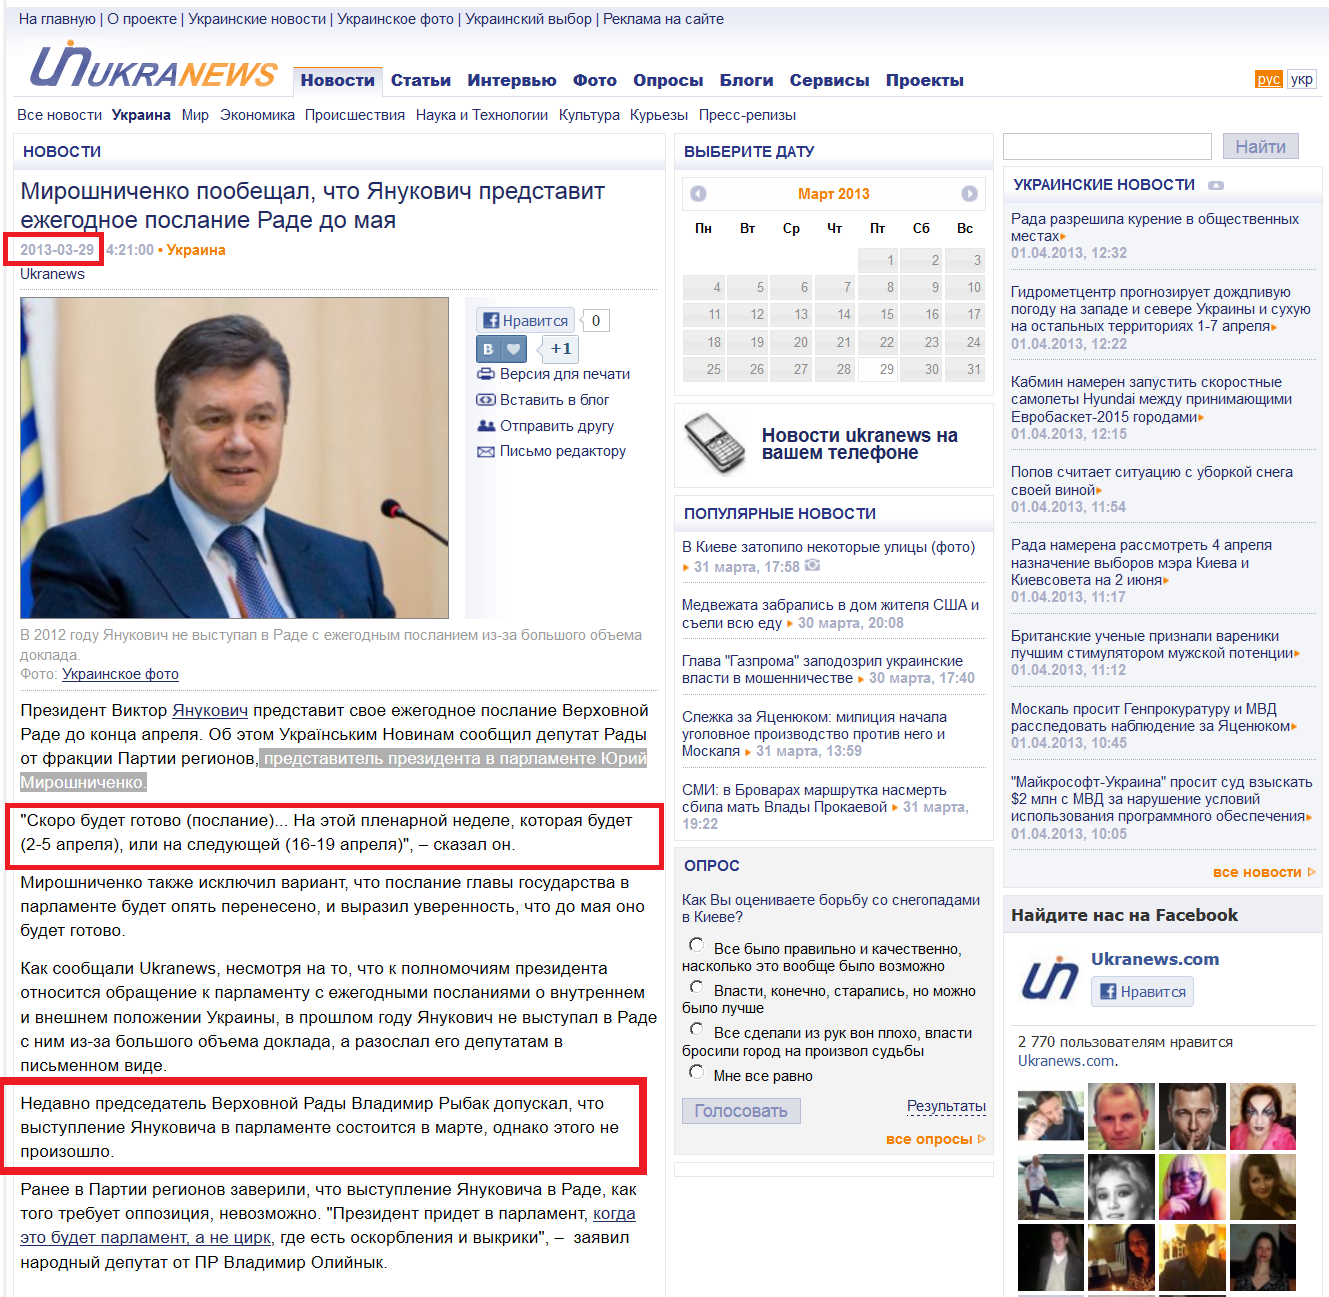 http://ukranews.com/ru/news/ukraine/2013/03/29/93068